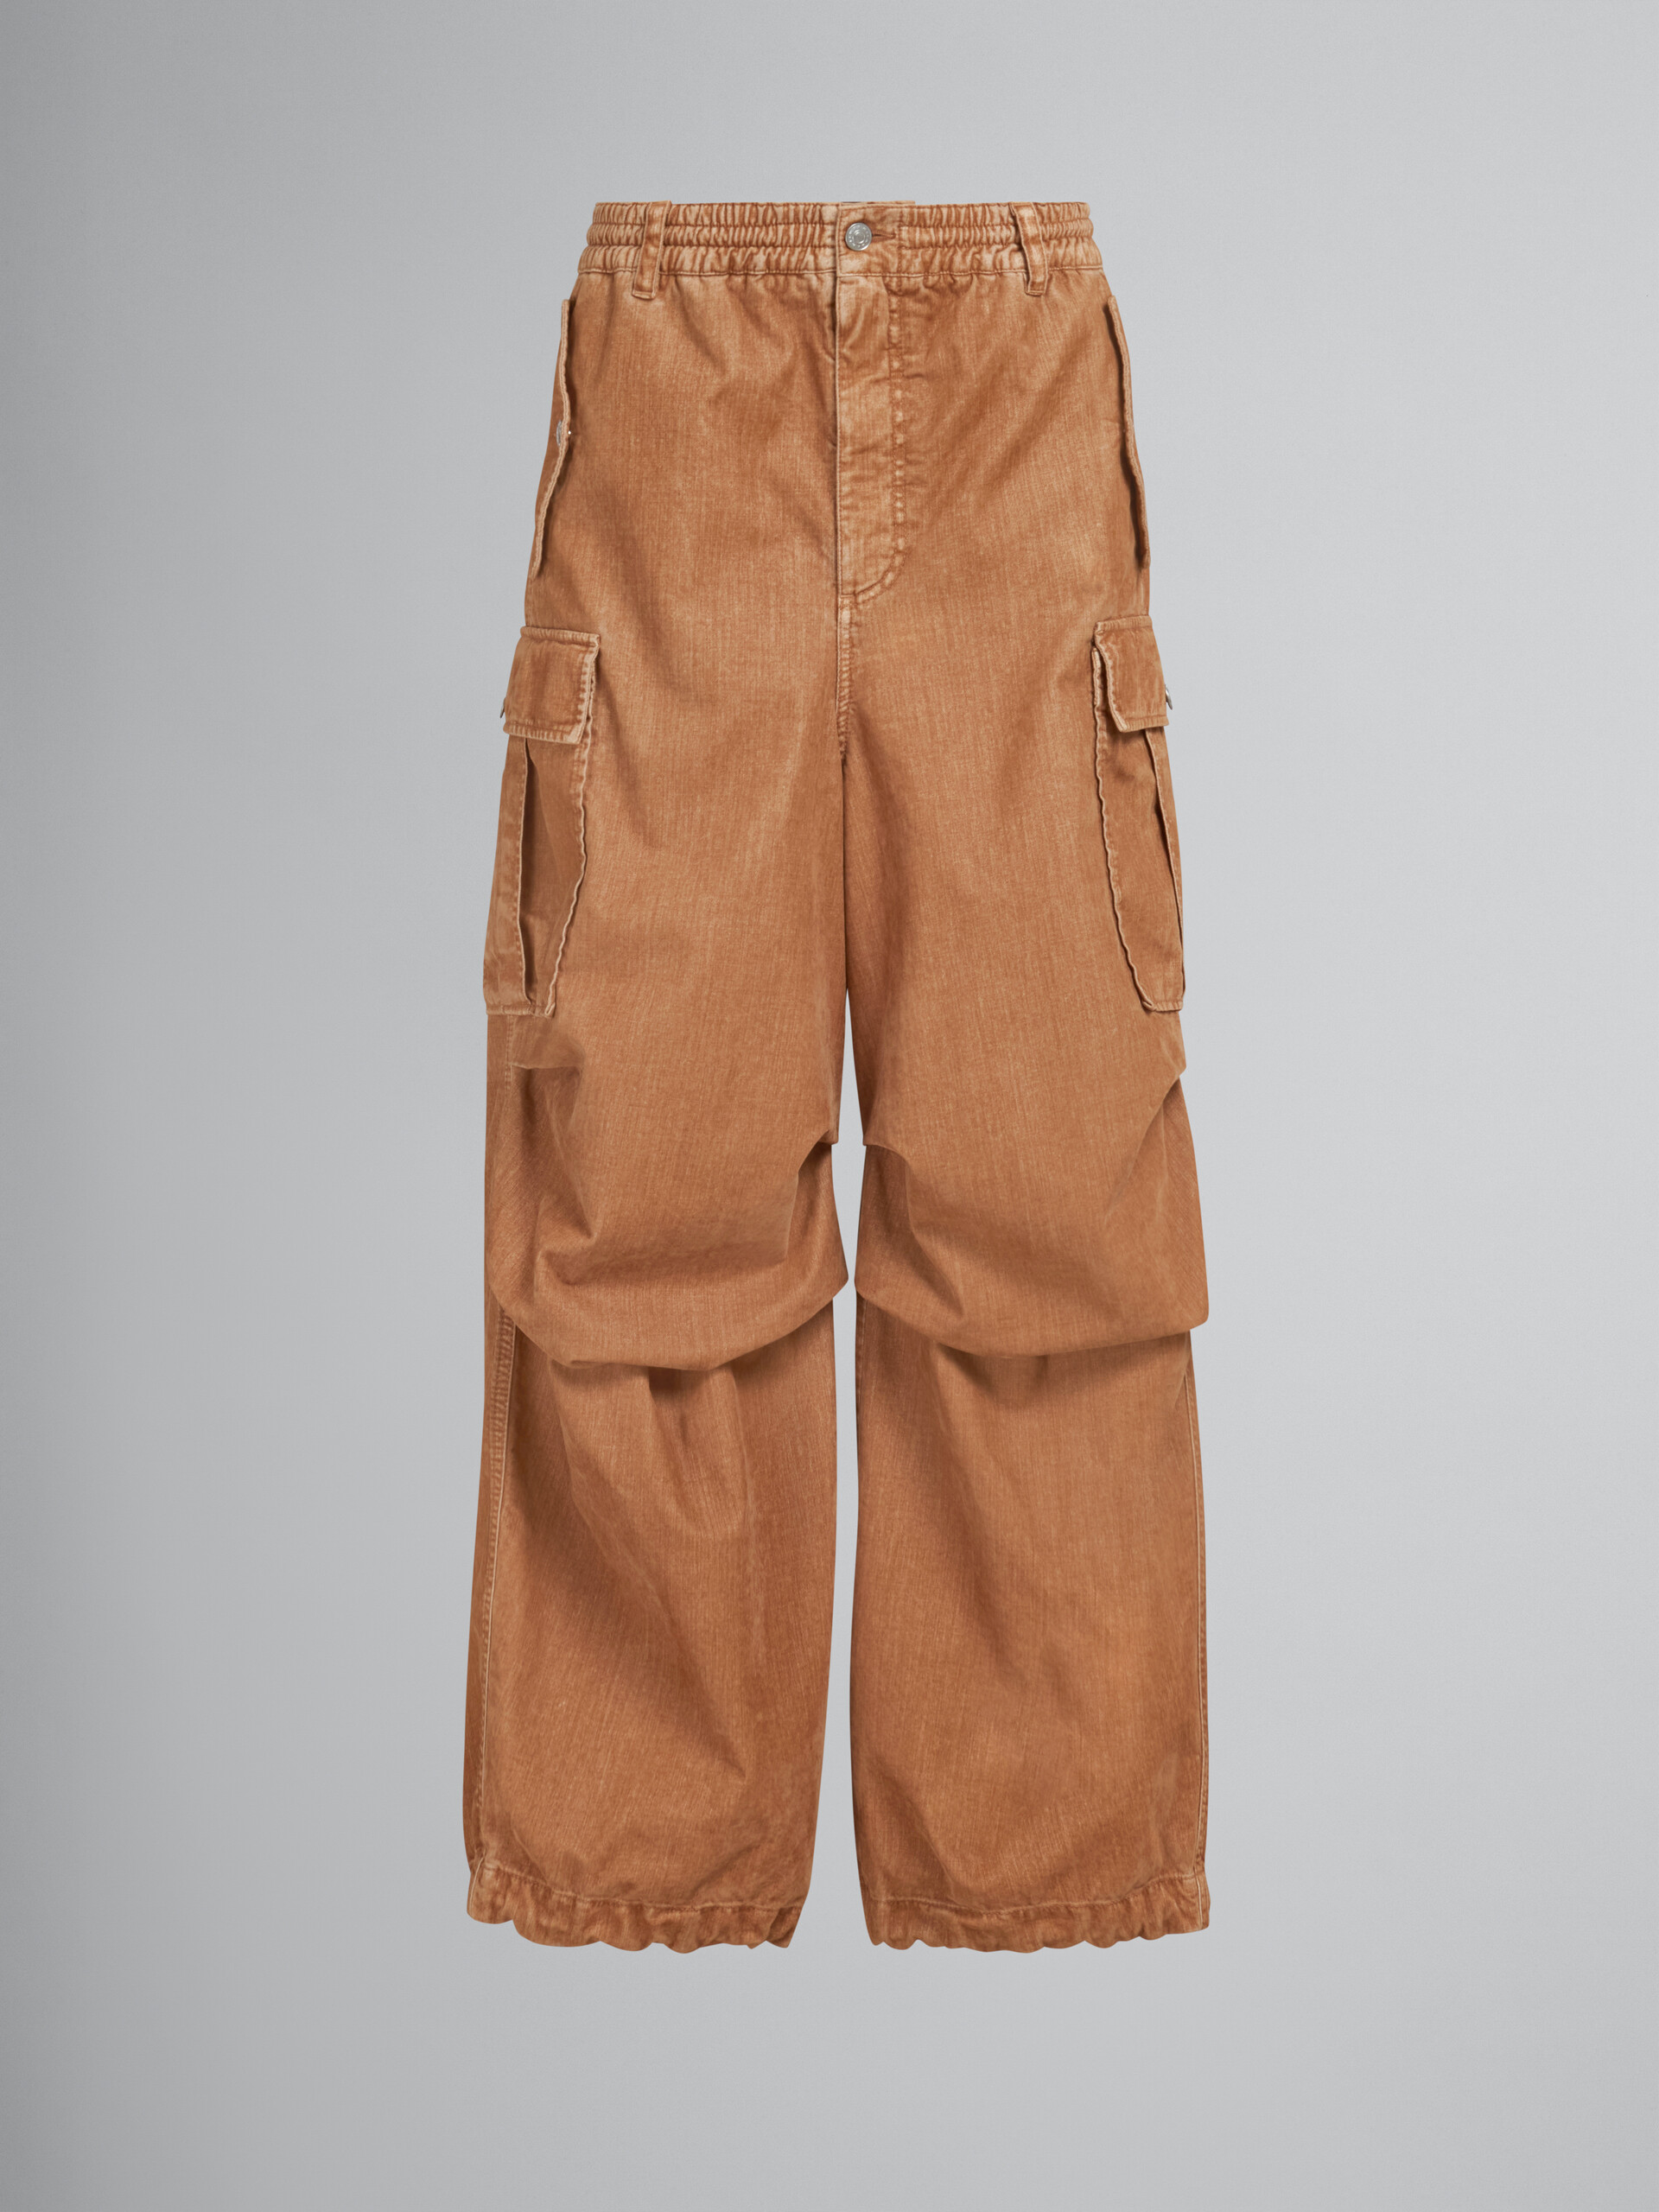 Beige flocked denim cargo pants - Pants - Image 1